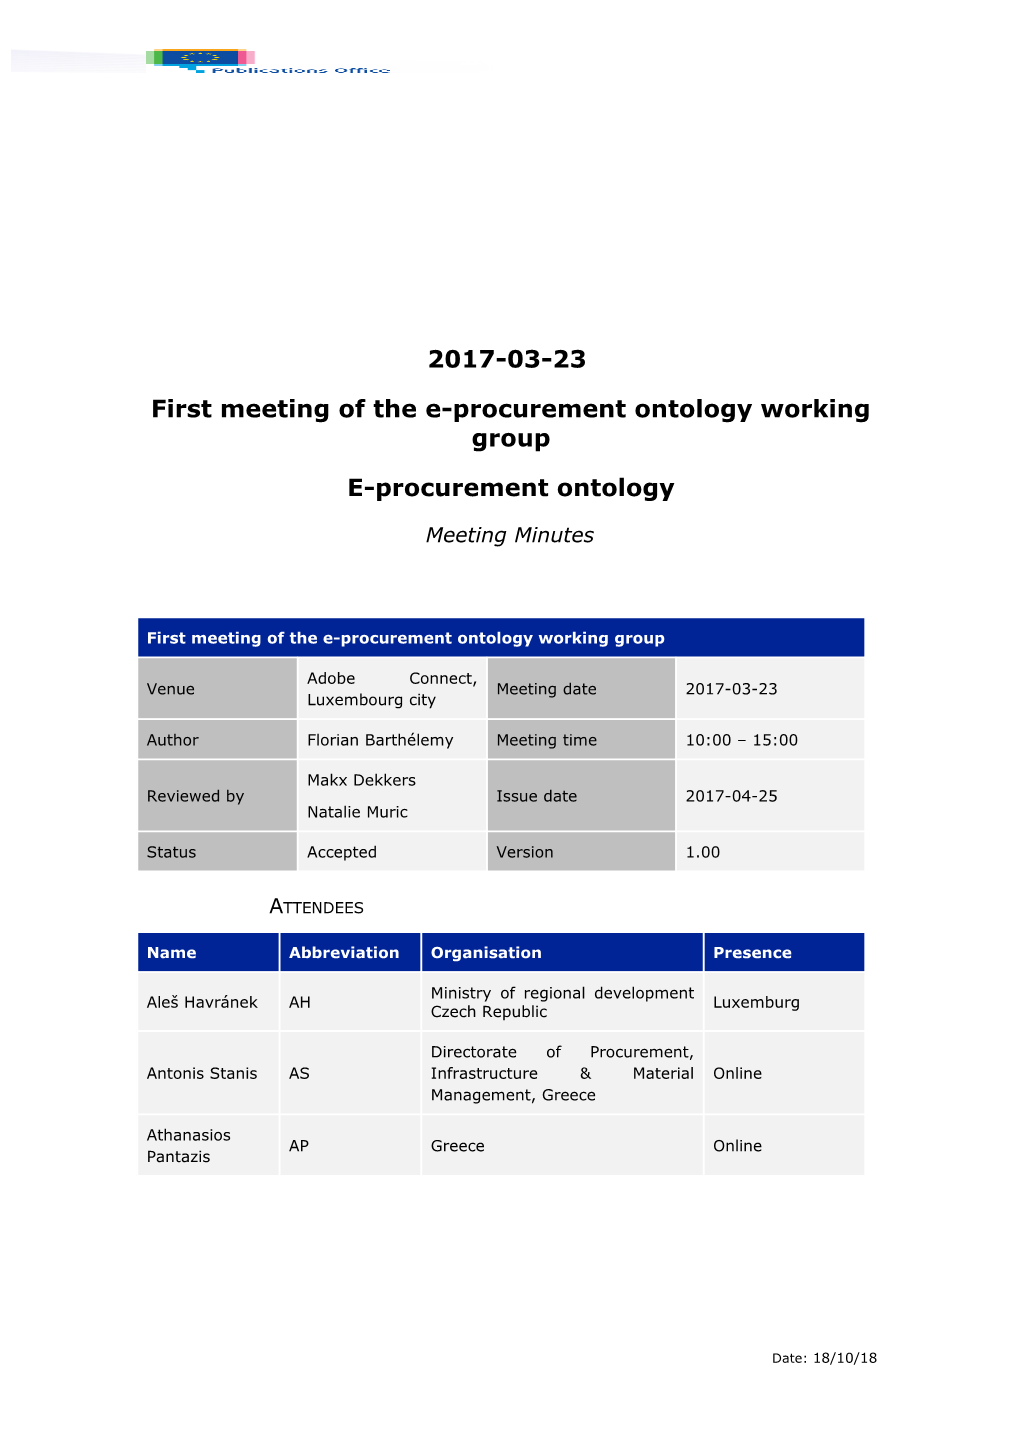 Workshop - Core Data Models for Public Administrations - 12 November 2014